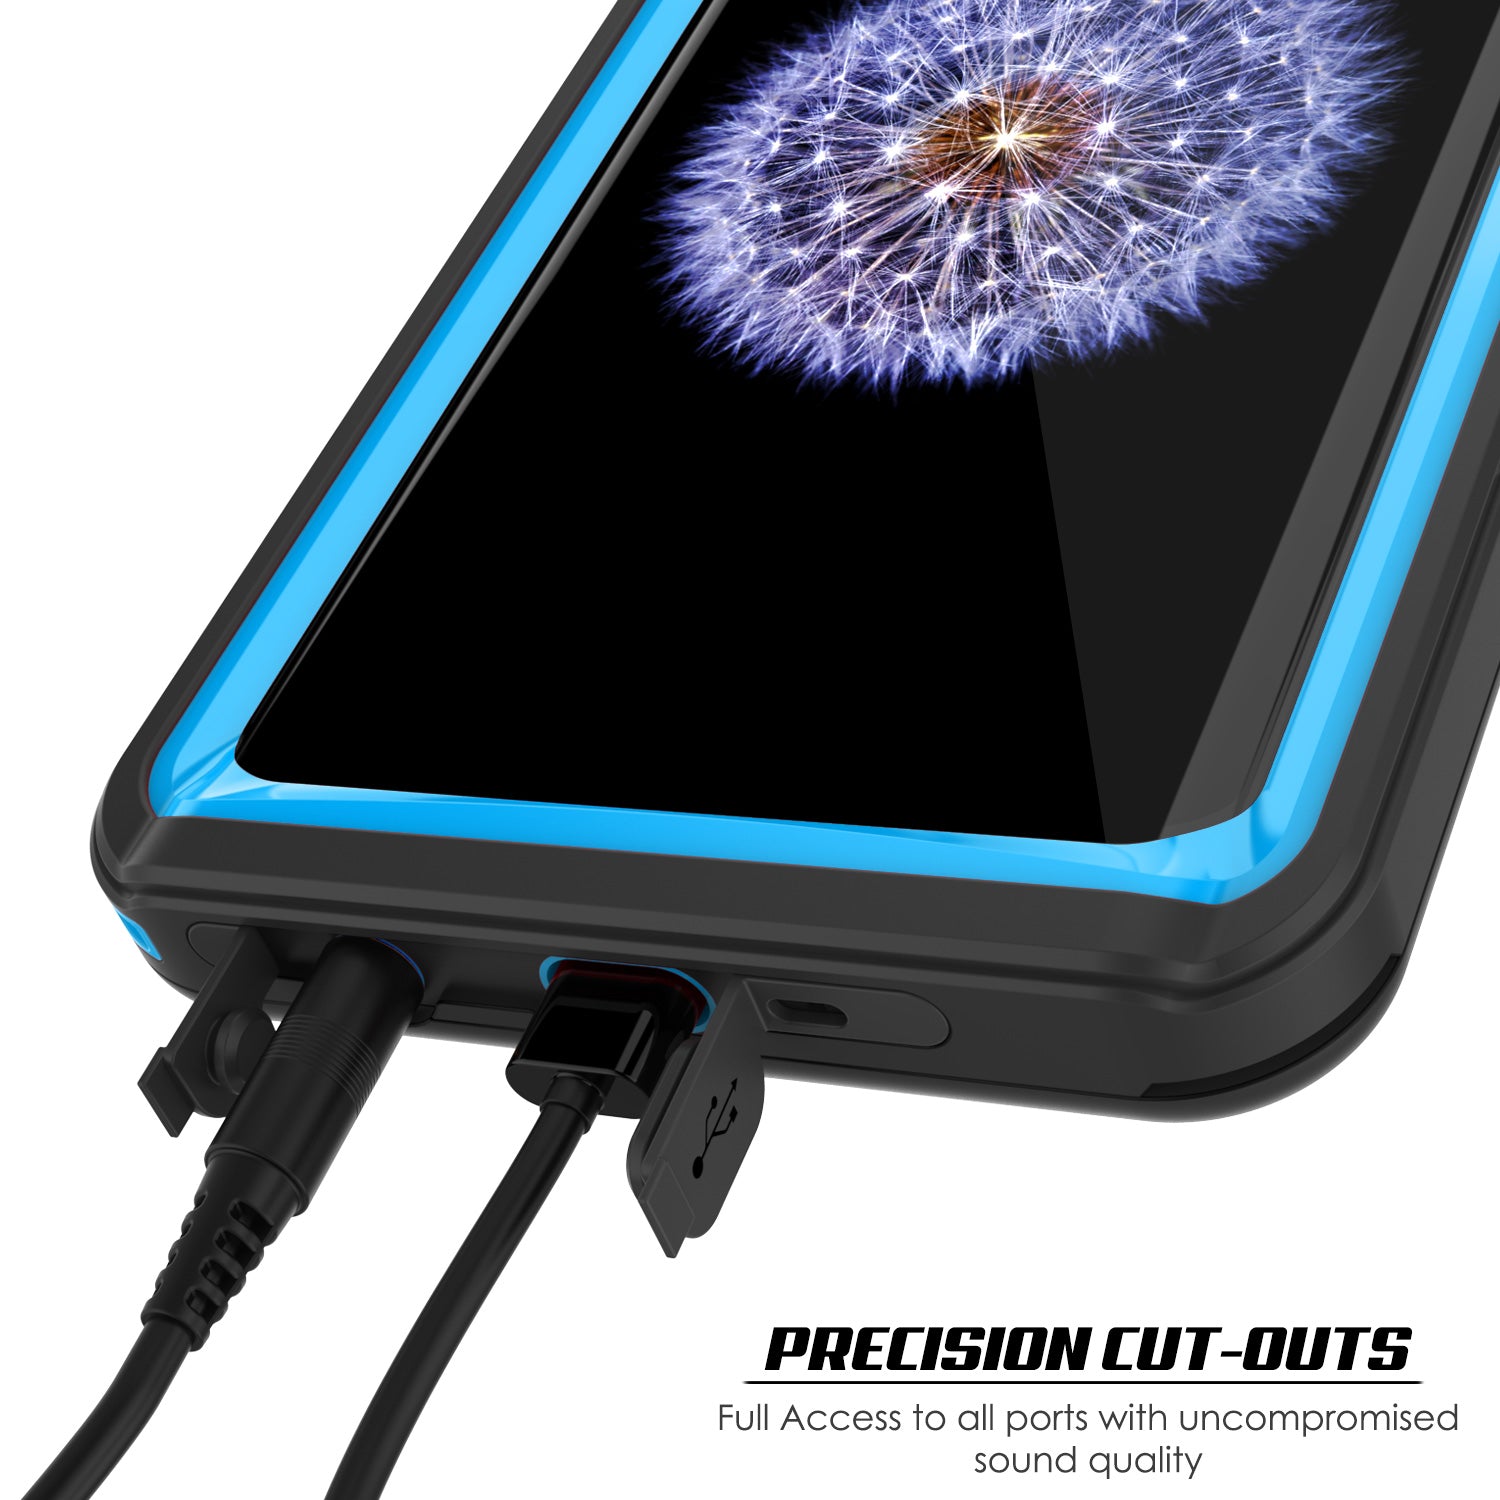 Galaxy S9 Water/Shock/DirtProof Slim Fit Case [Light Blue]